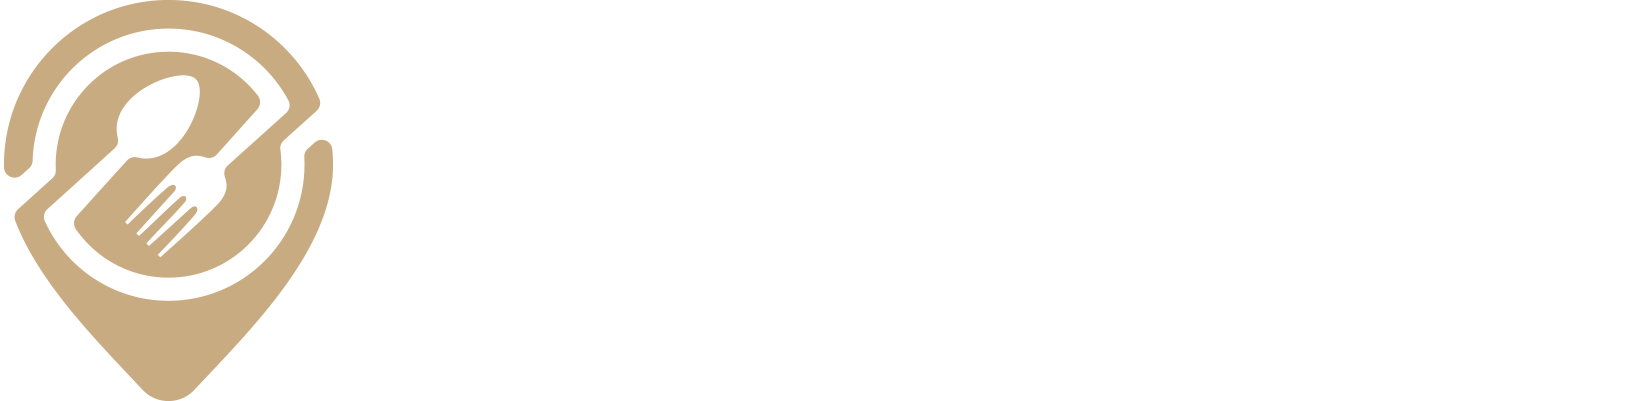 millennium-sidebar-logo